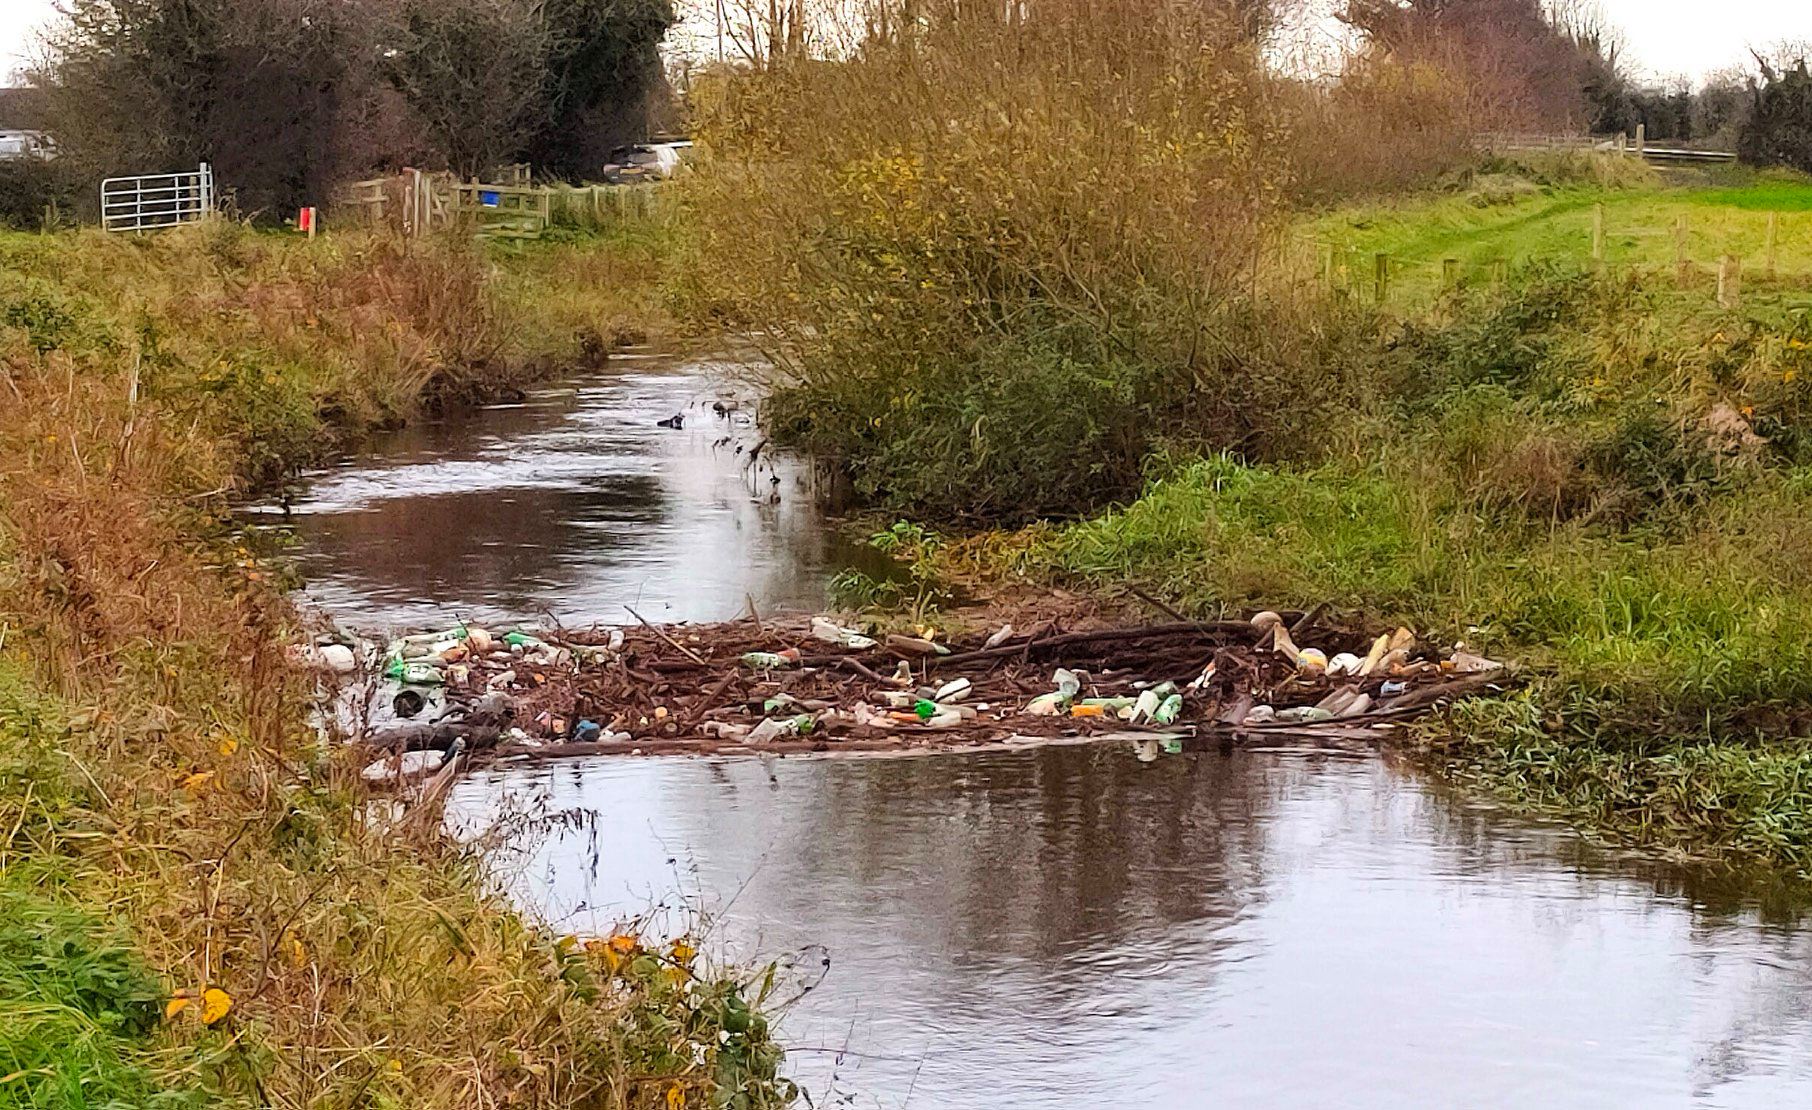 Coalisland canal rubbish putting wildlife in danger